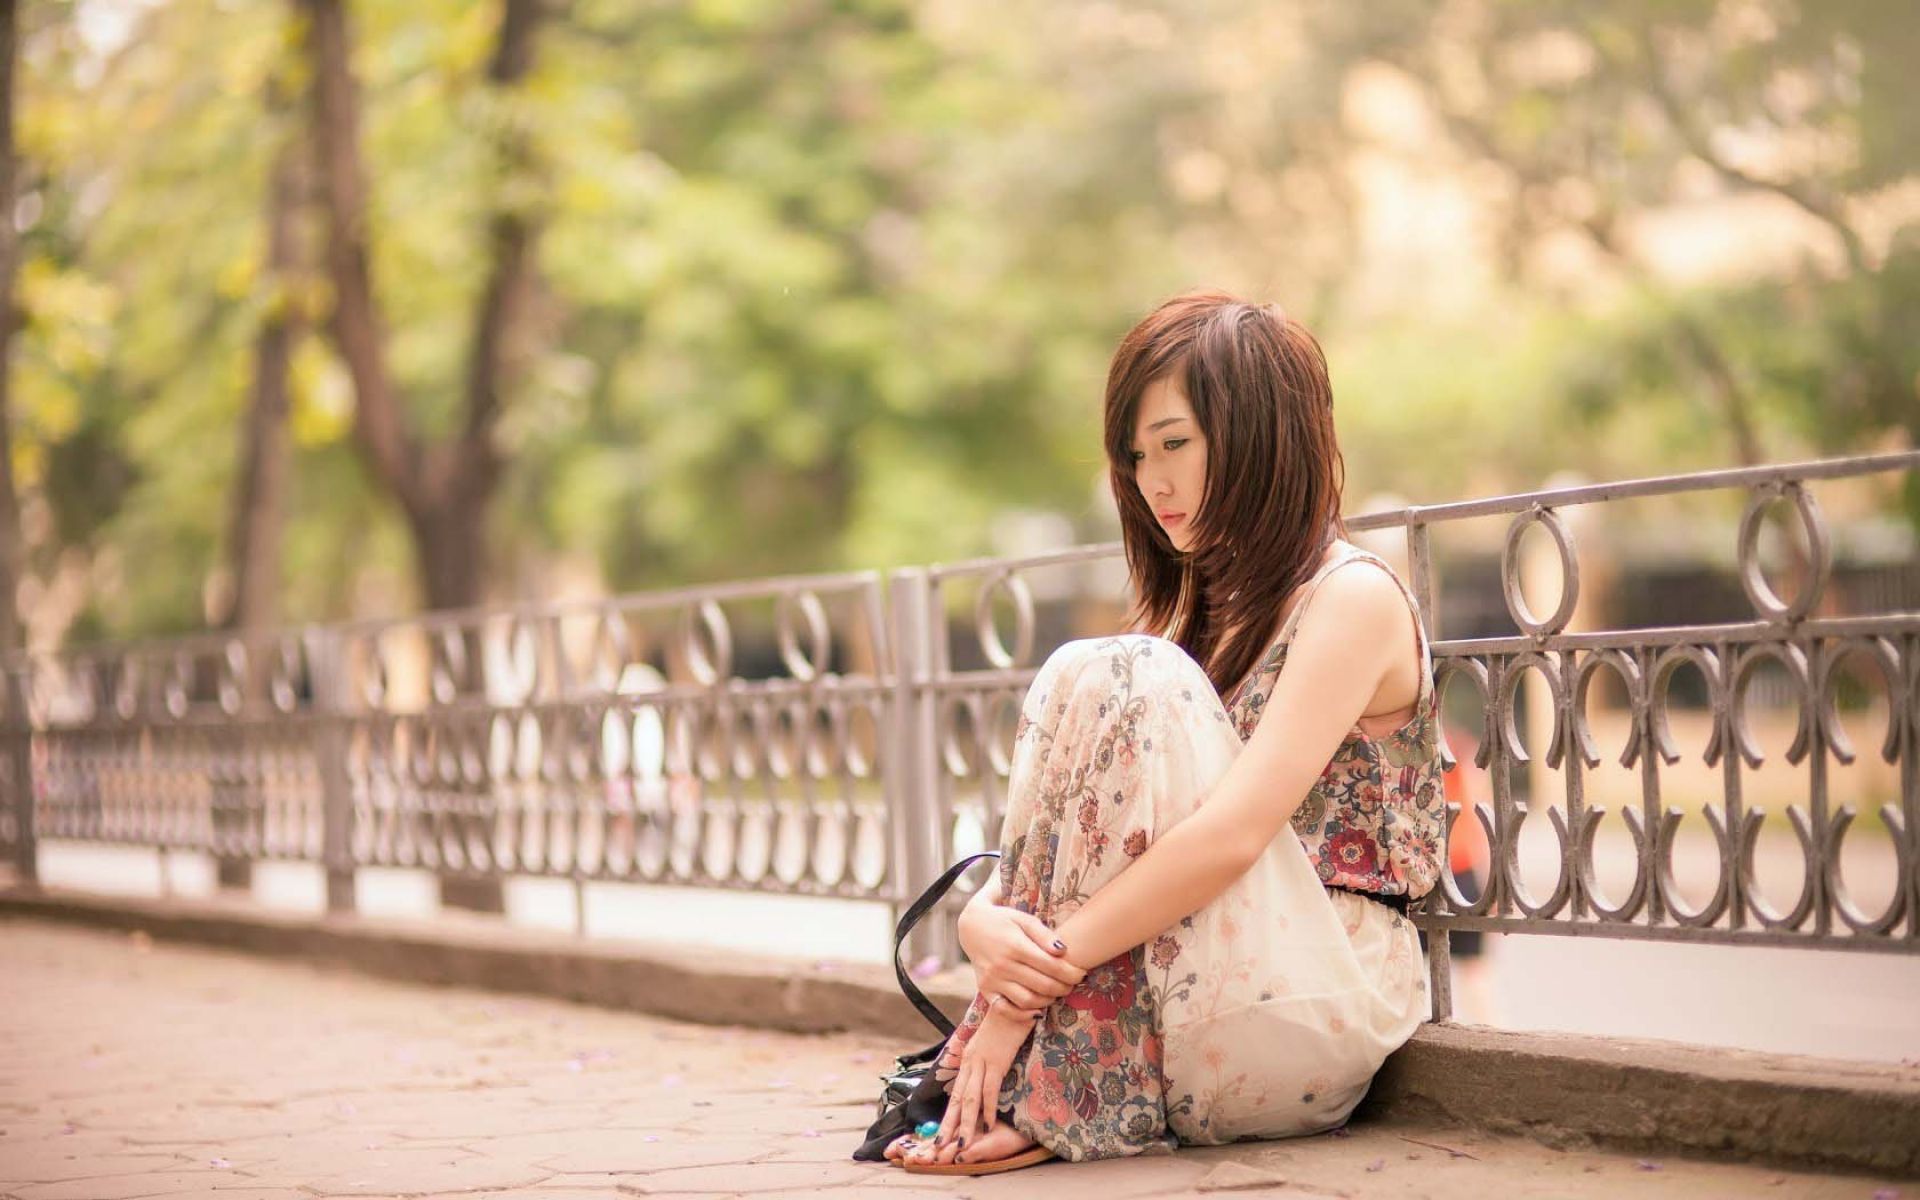 Sad Girl On The Street HD Wallpaper Girl Image Sitting Alone